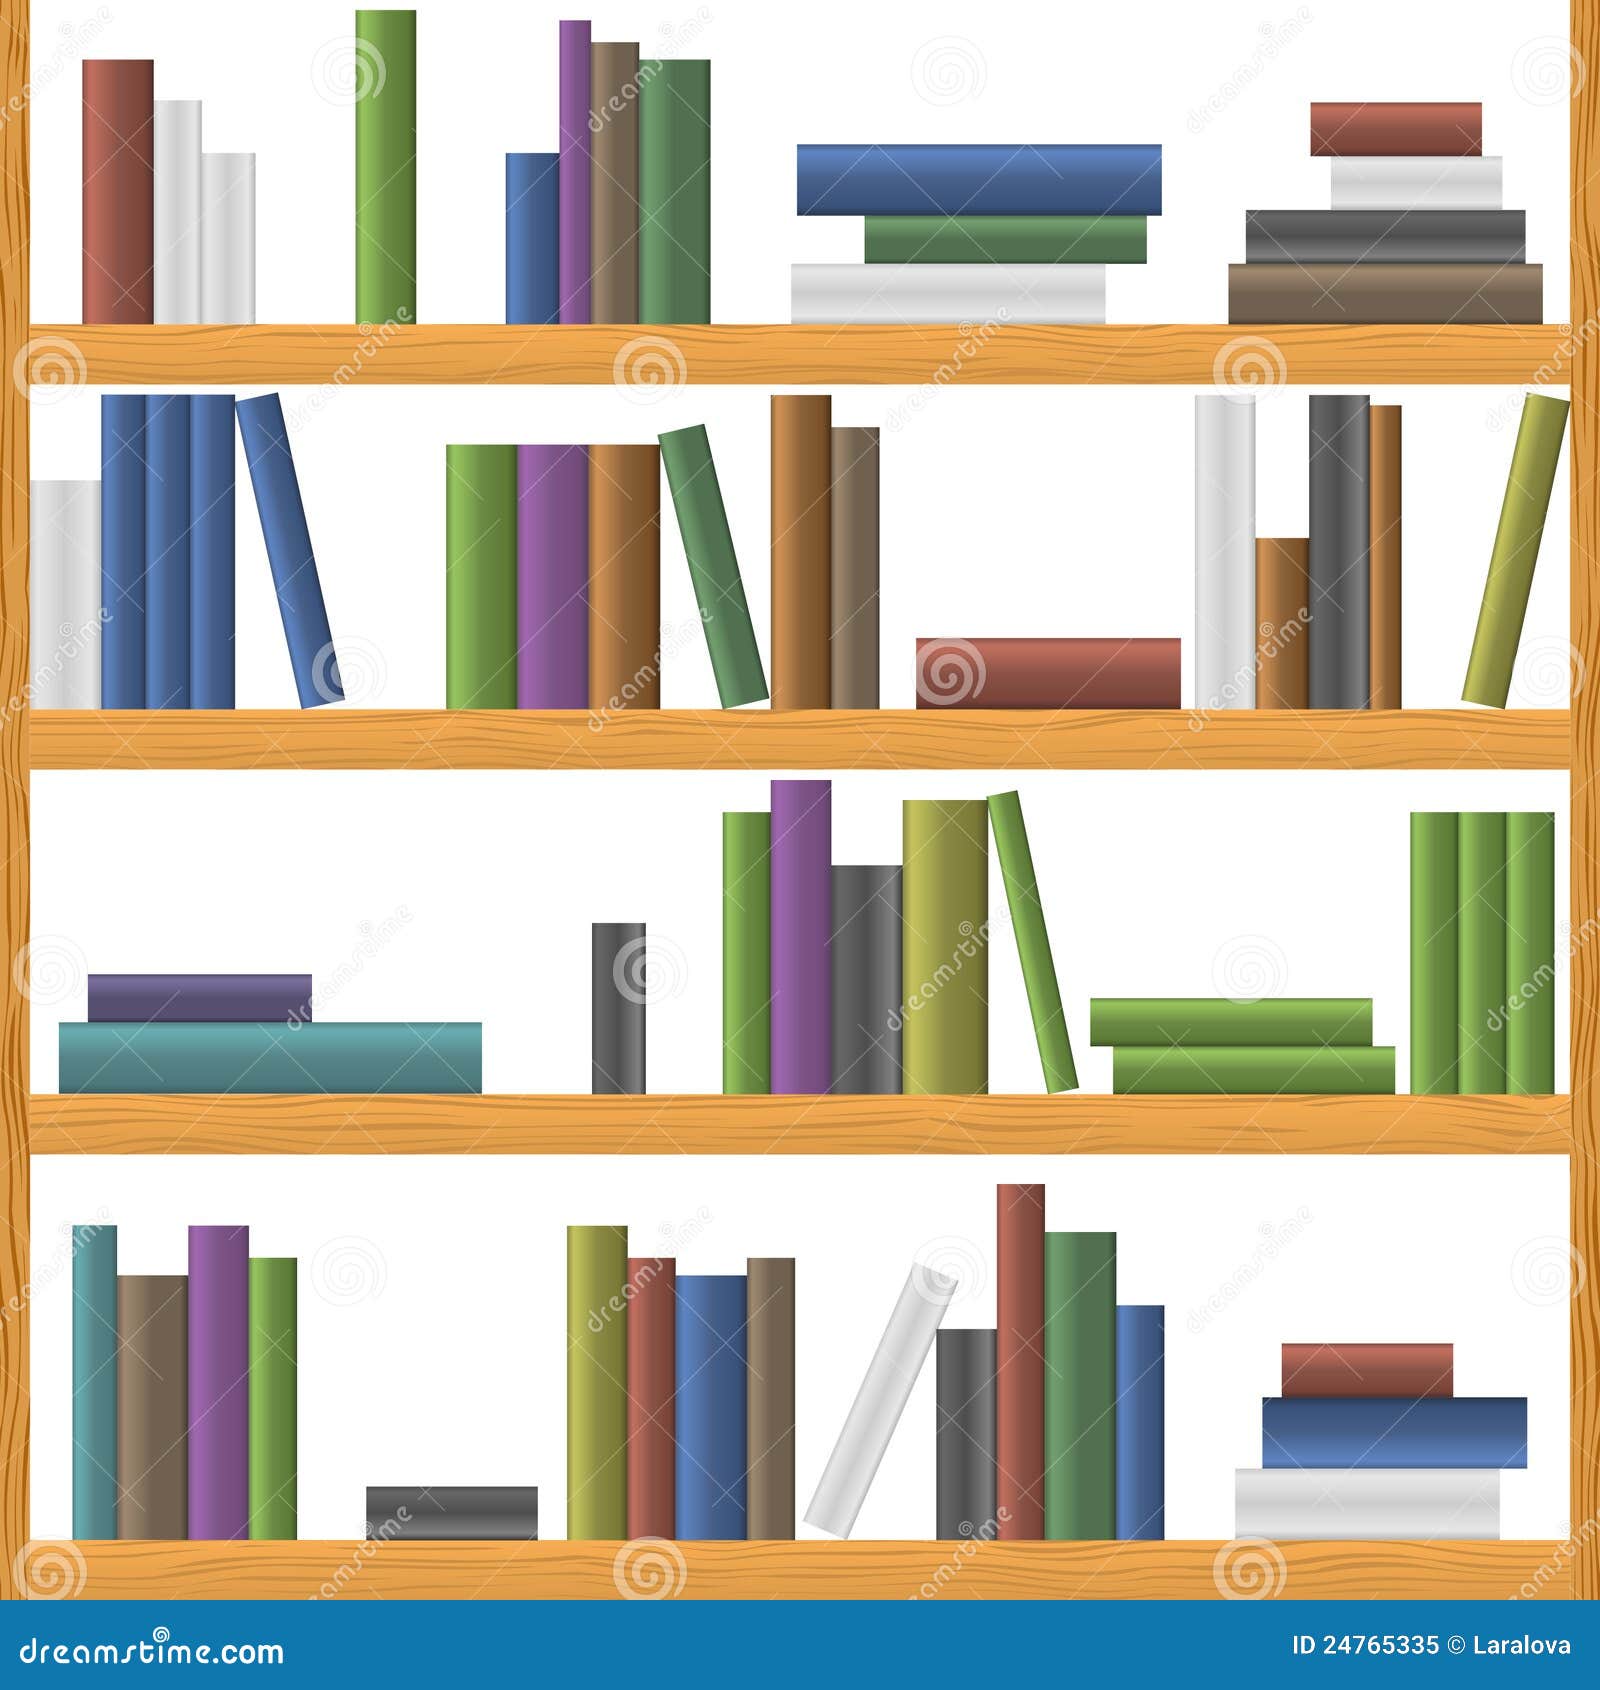 bookshelves. seamless background pattern